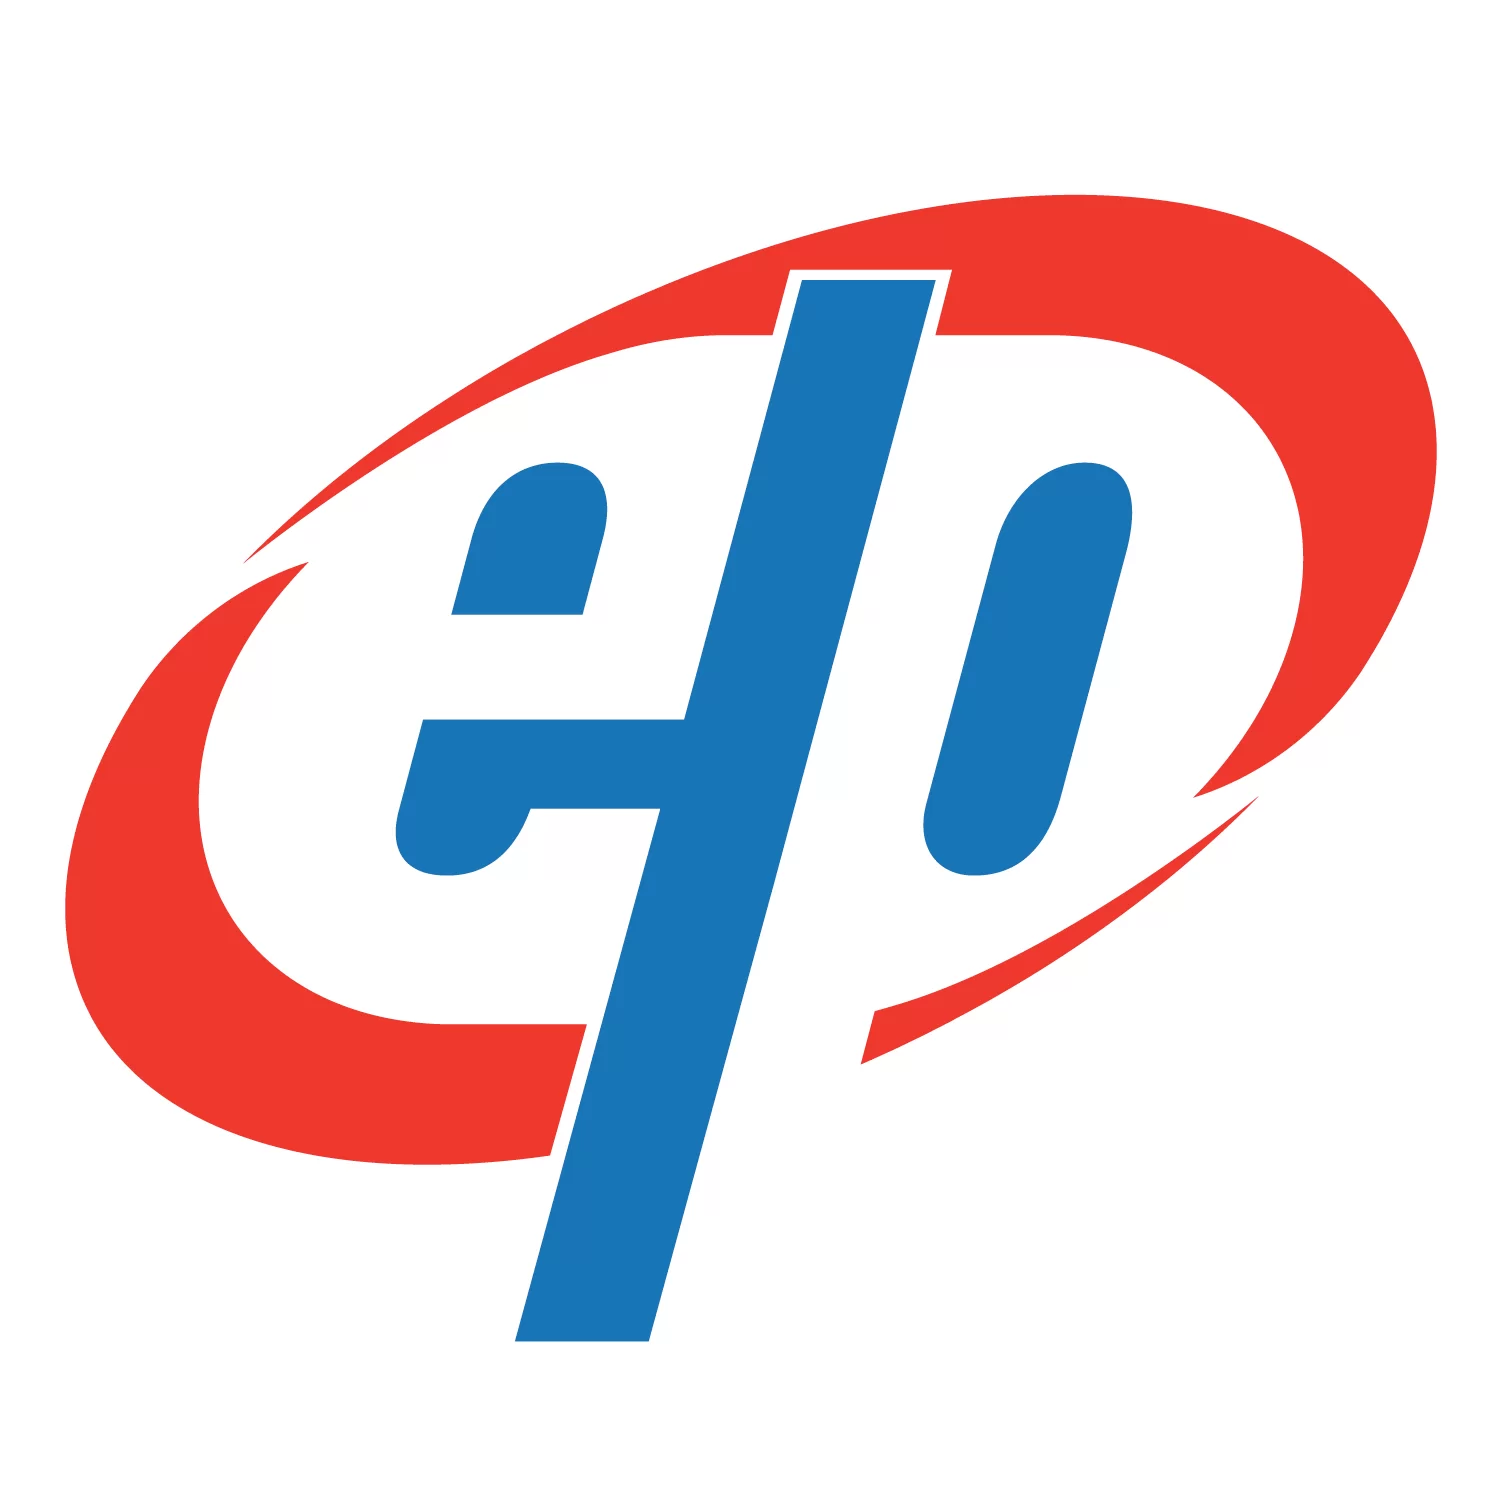 EP Technology Pte Ltd